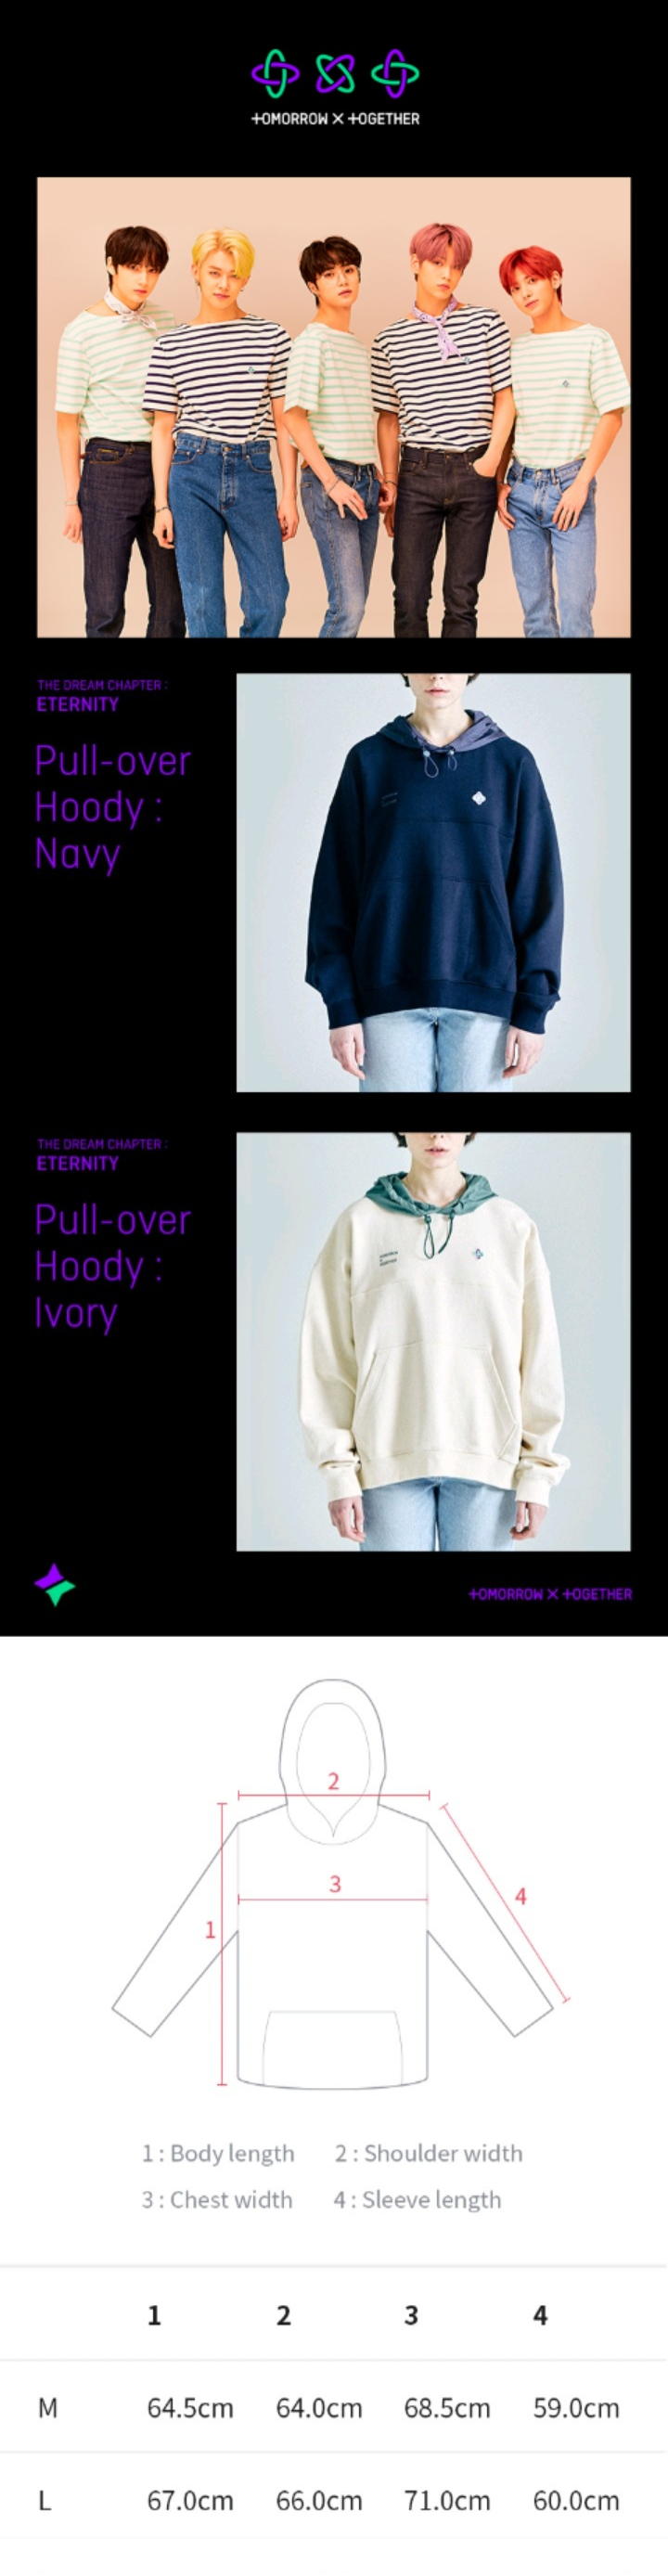 TXT Eternity Uniform - Pull-Over Hoody